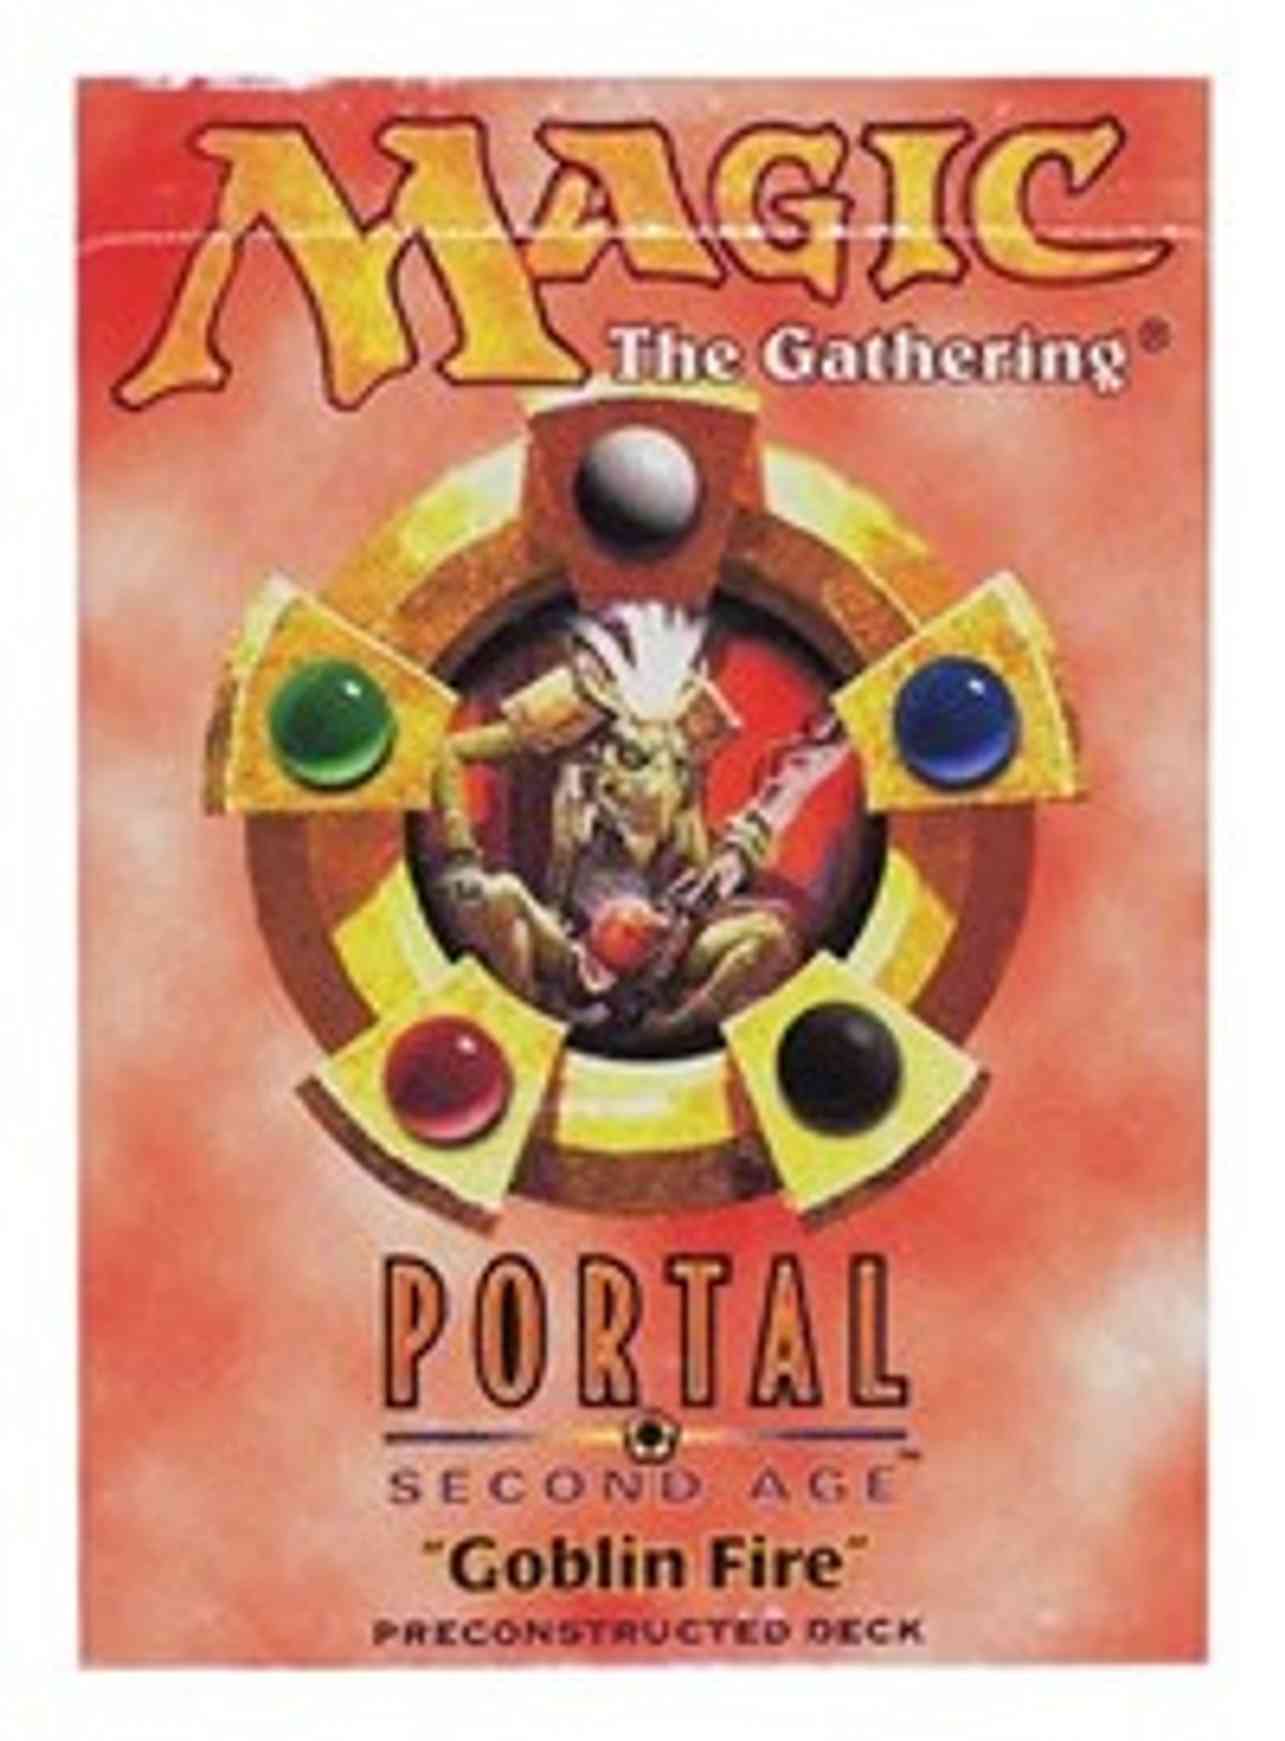 Portal Second Age Theme Deck - Goblin Fire magic card front